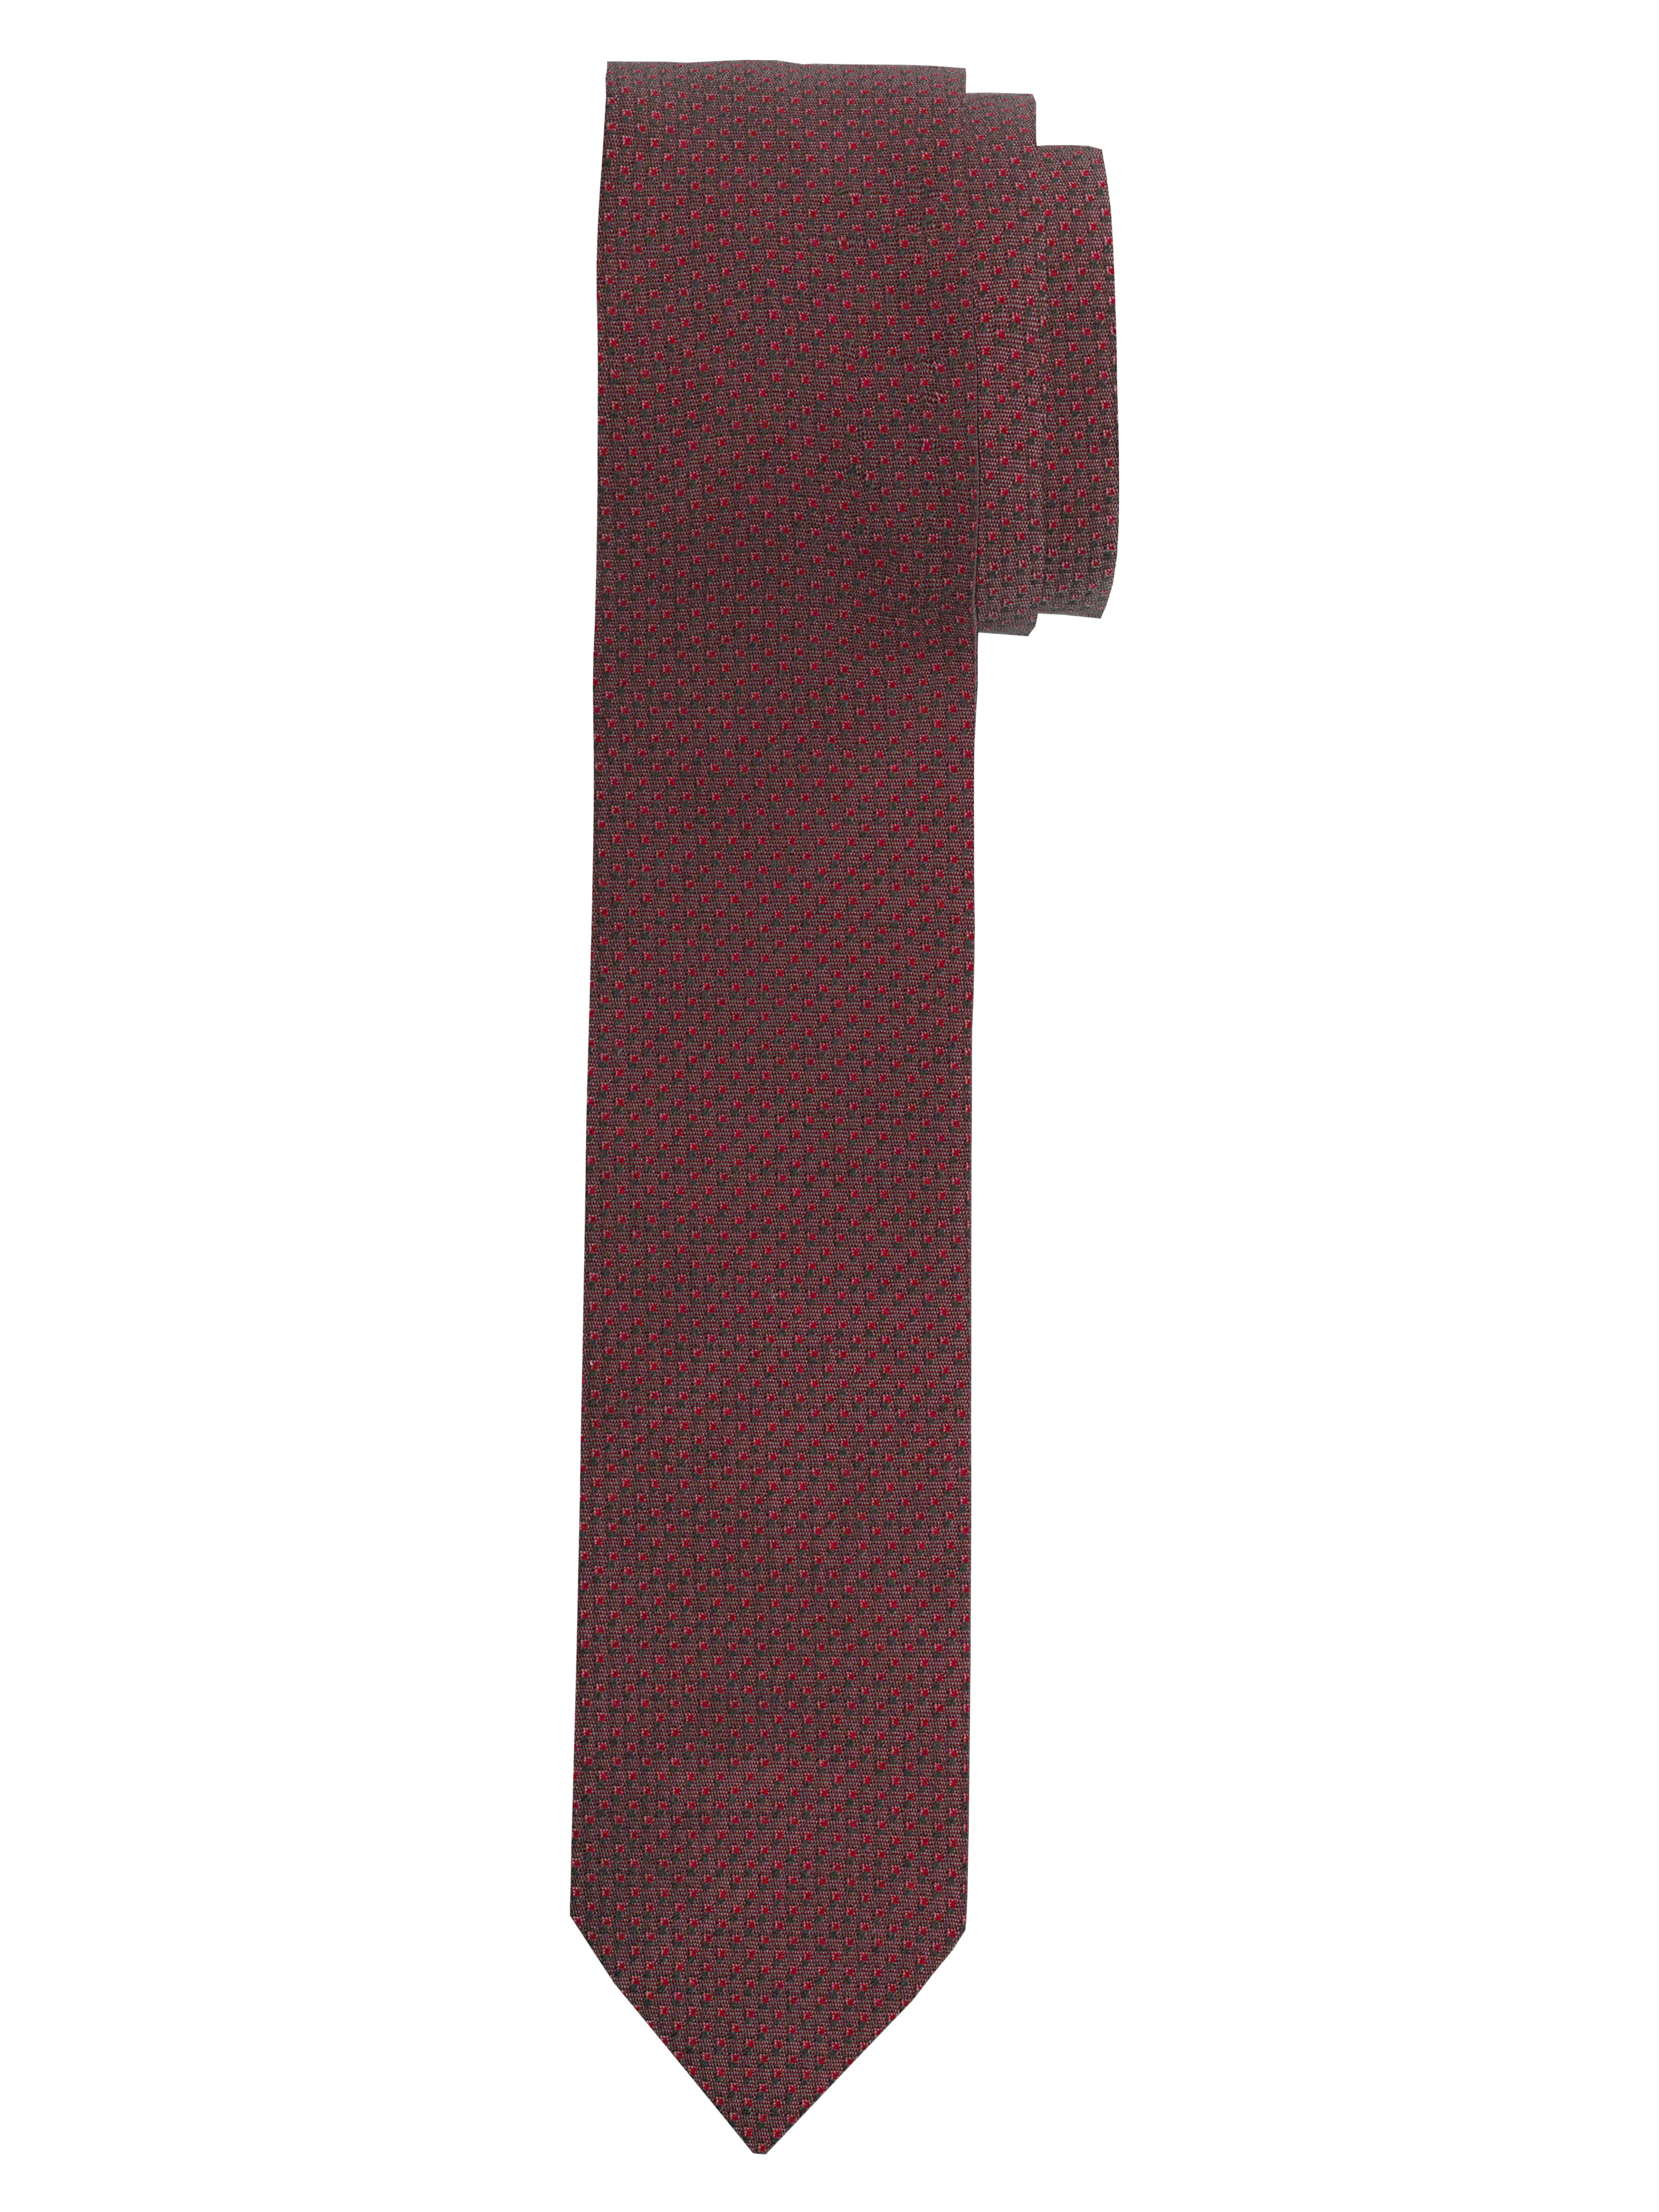 OLYMP Krawatte, super slim 5 cm | Rot - 1722003501